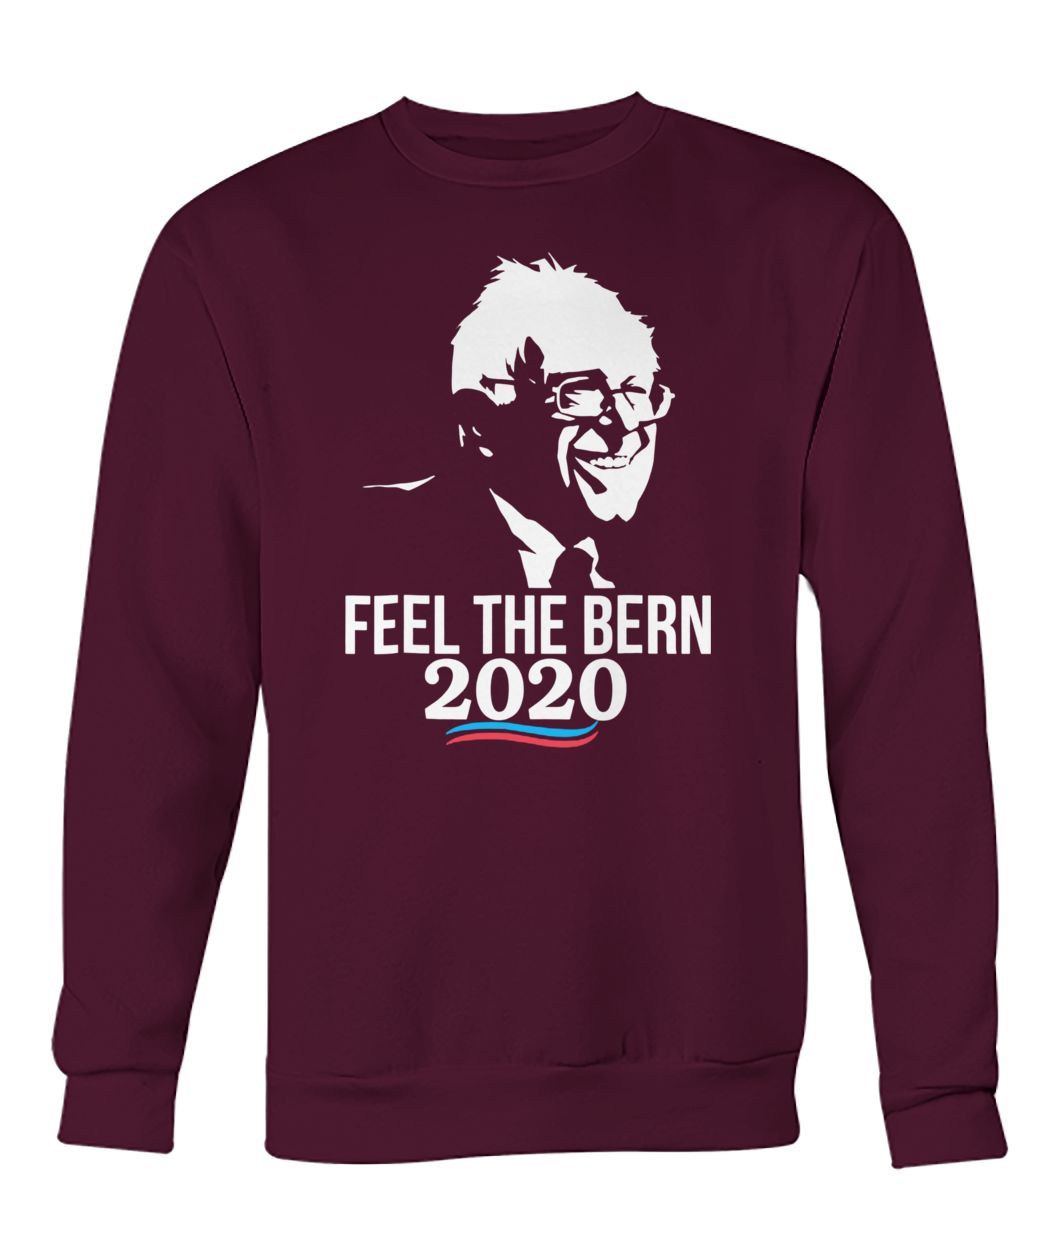 Feel the bern bernie sanders for president 2020 crew neck sweatshirt